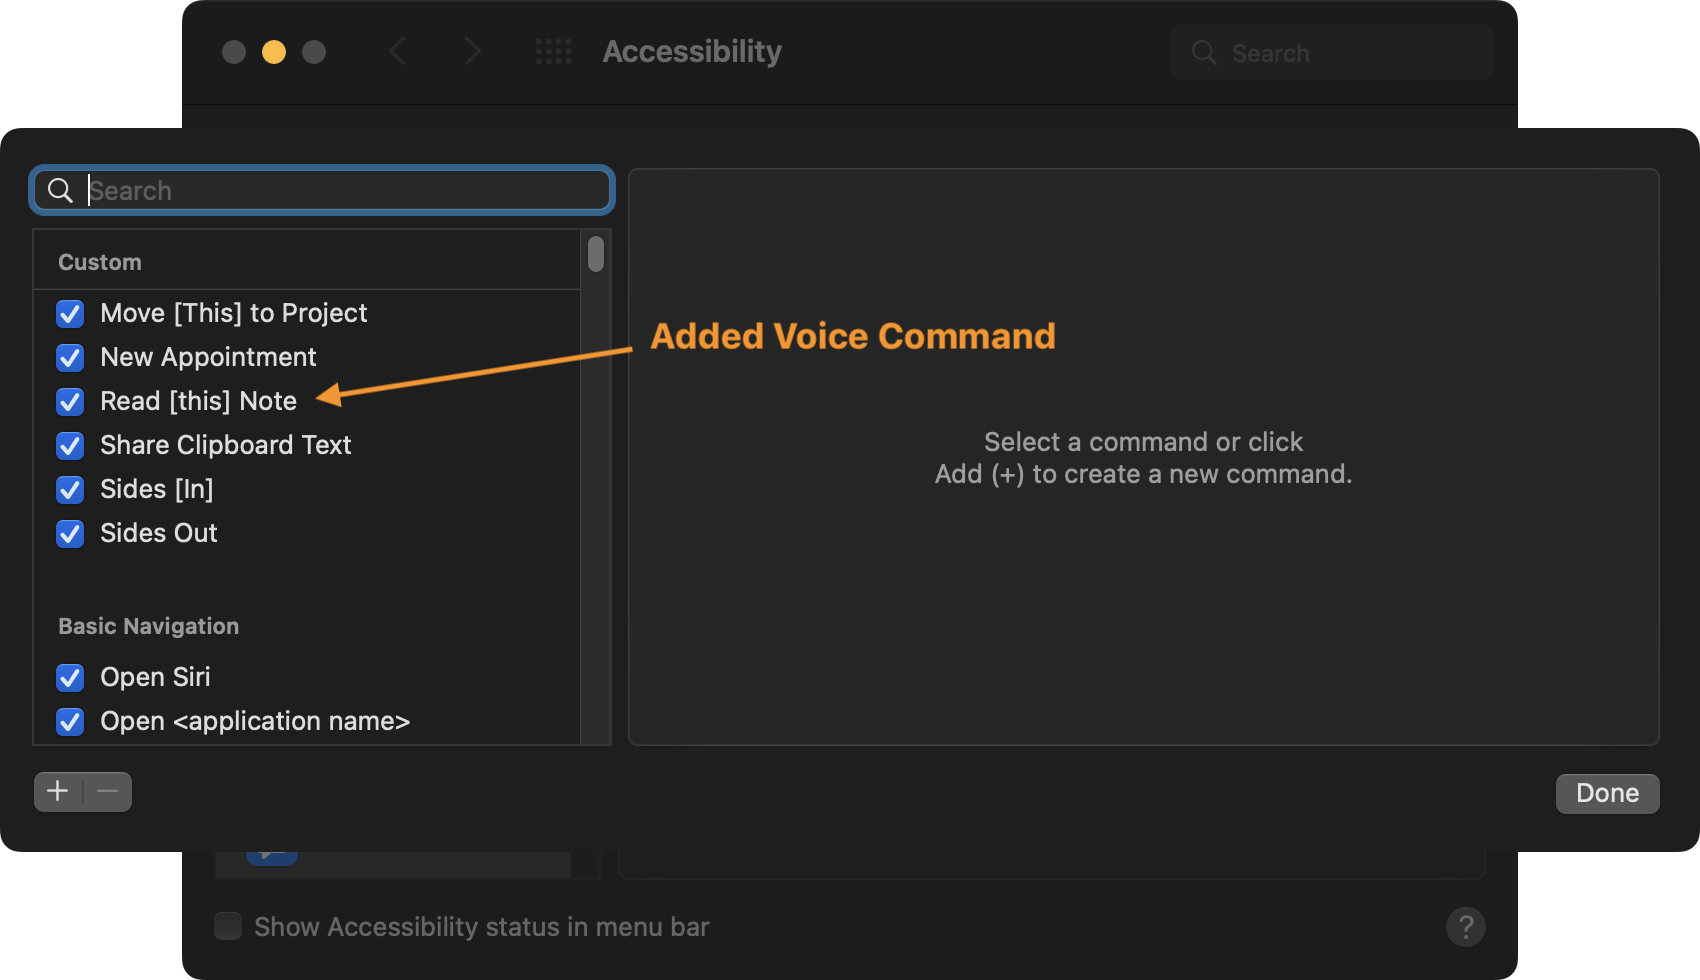 New Voice Command setup